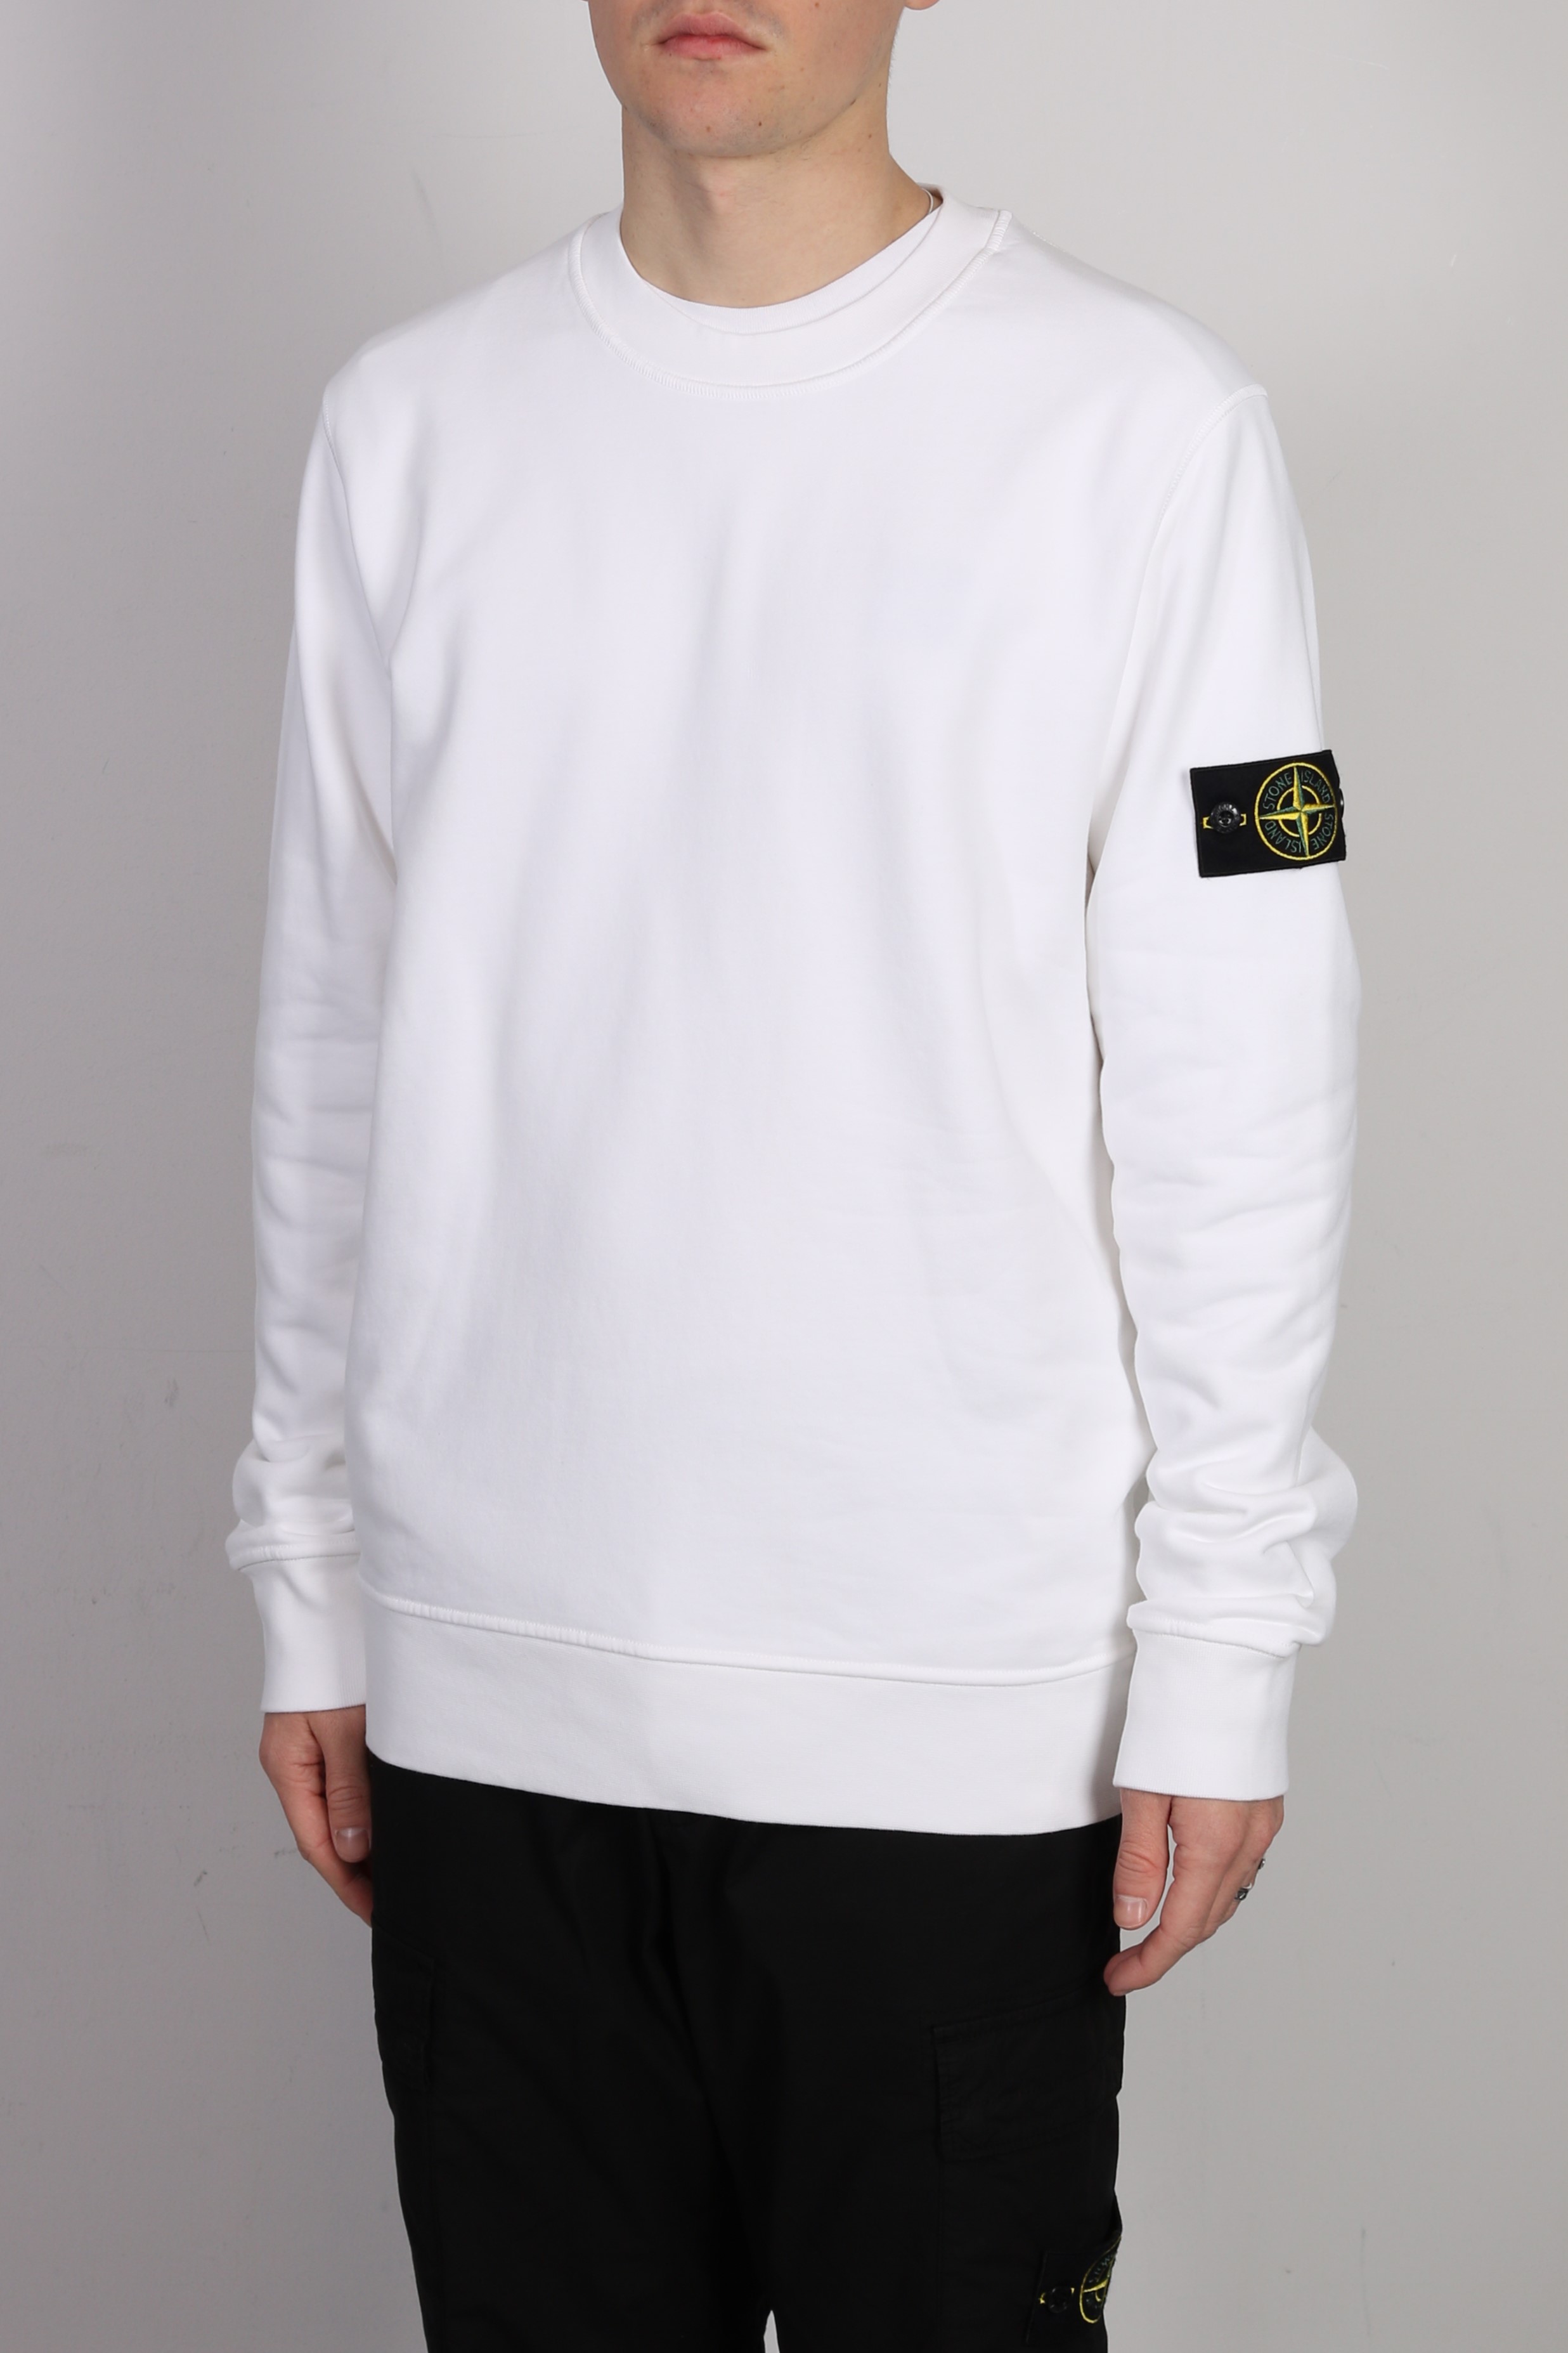 STONE ISLAND Sweatshirt in White L